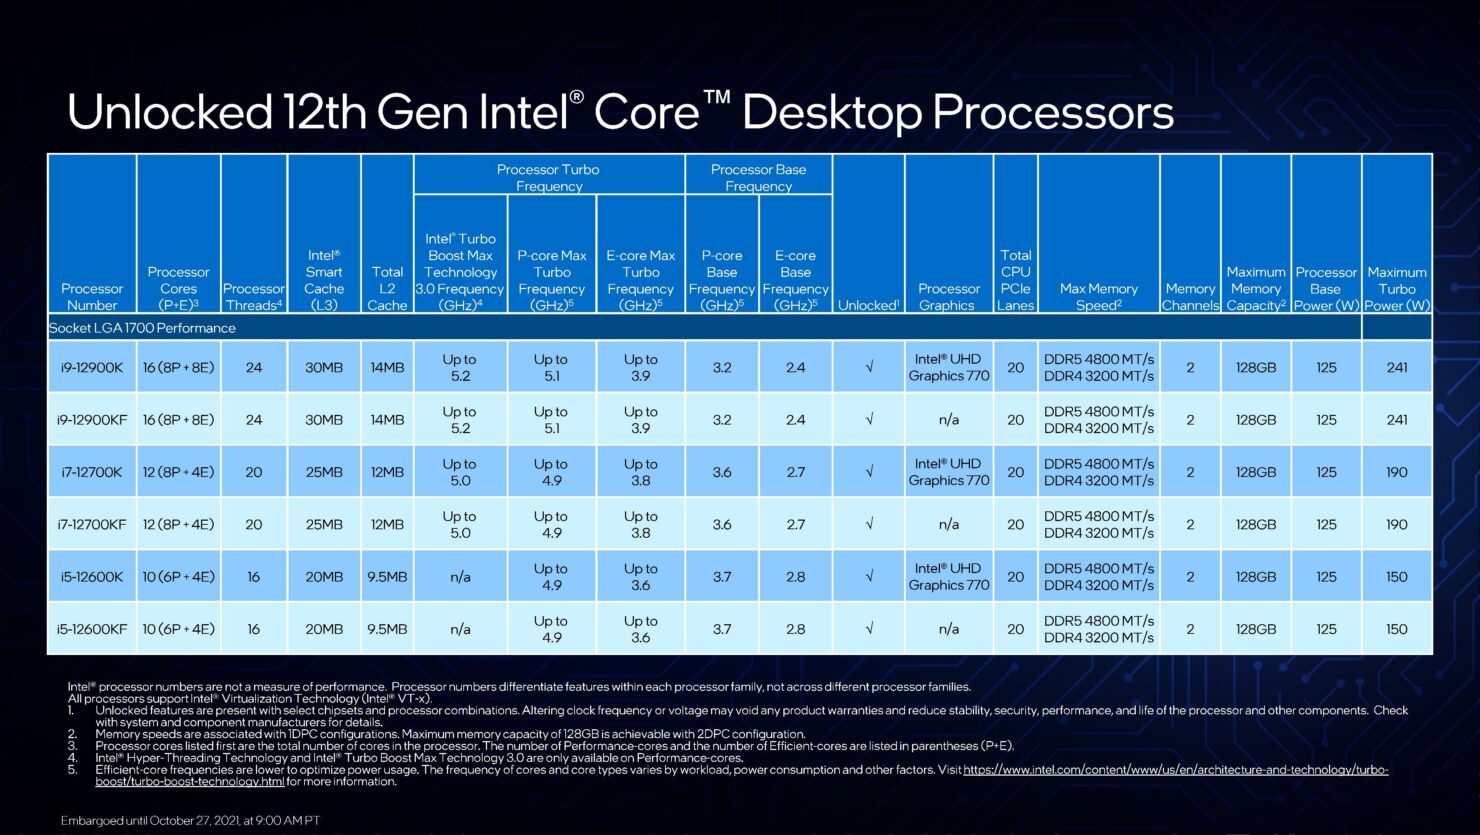 12th-gen-intel-core-desktop-processors-blueprint-presentation-embargoed-until-oct-27-2021-at-9-00am-pt-page-054